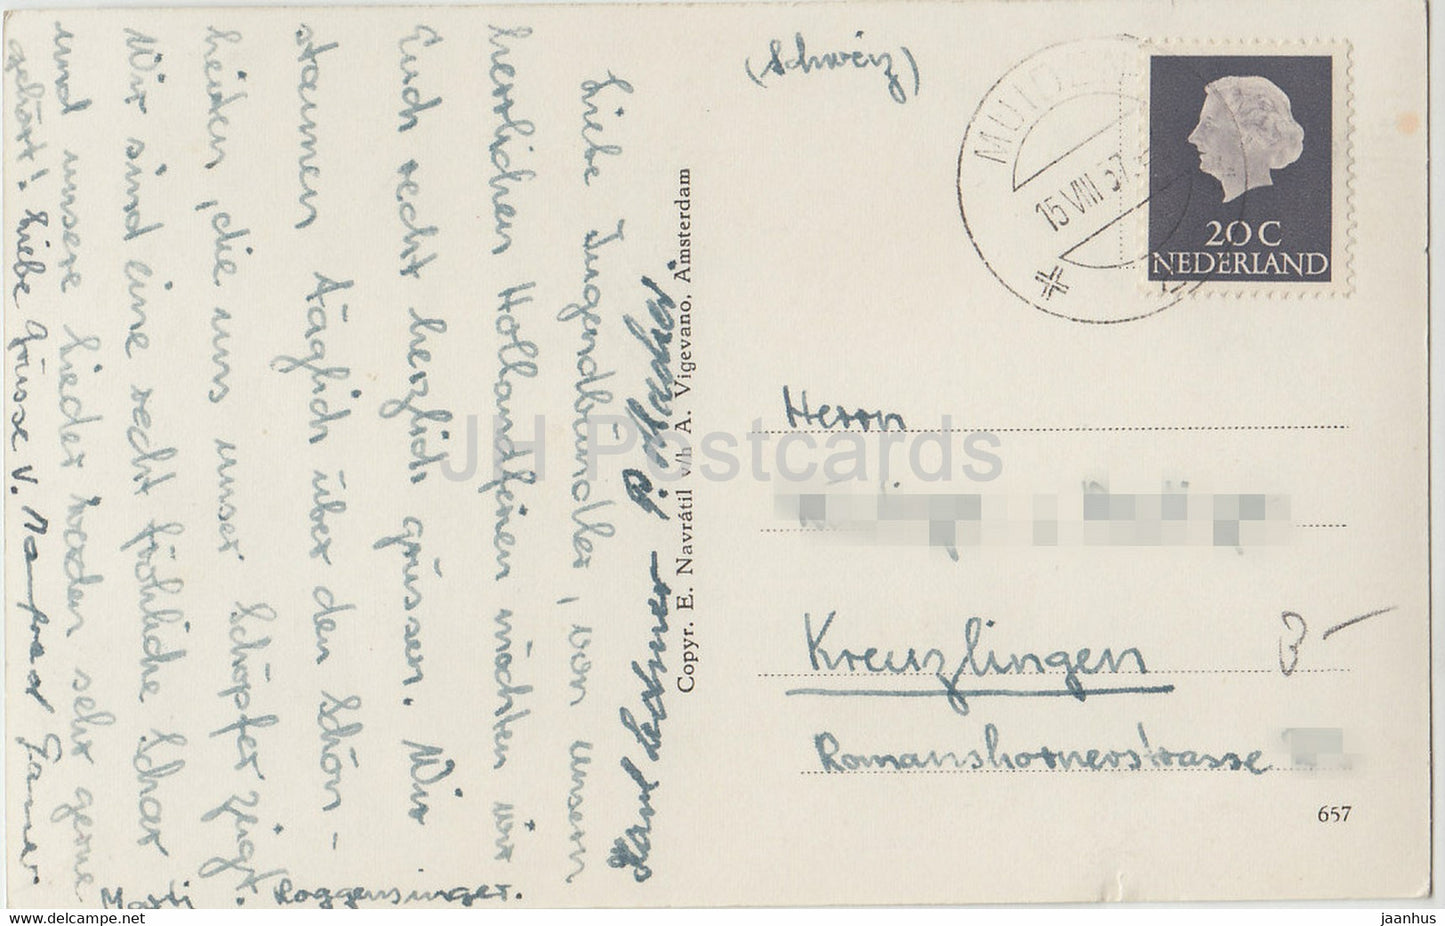 Amsterdam - Herengracht - carte postale ancienne - 1957 - Pays-Bas - utilisé